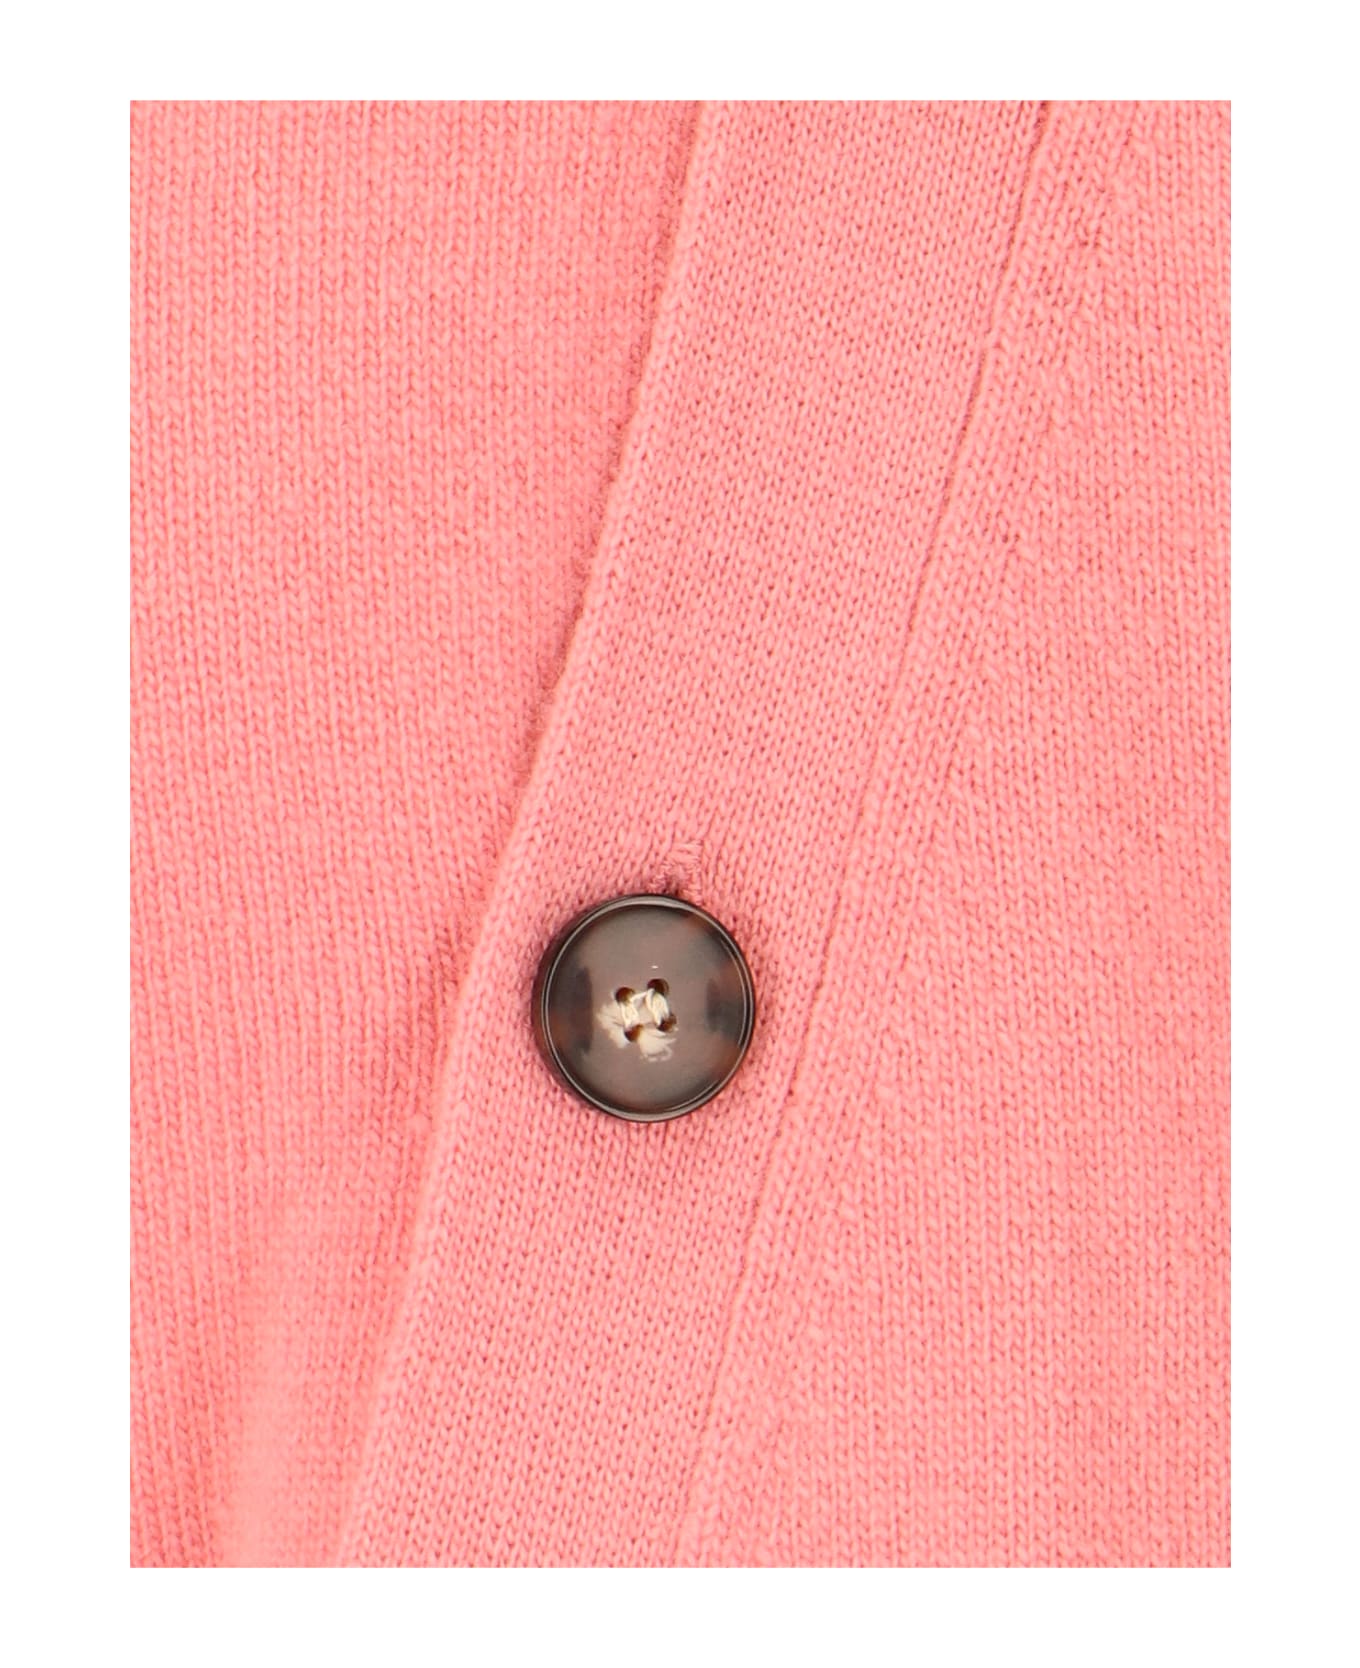 The Garment Vest "como" - Pink